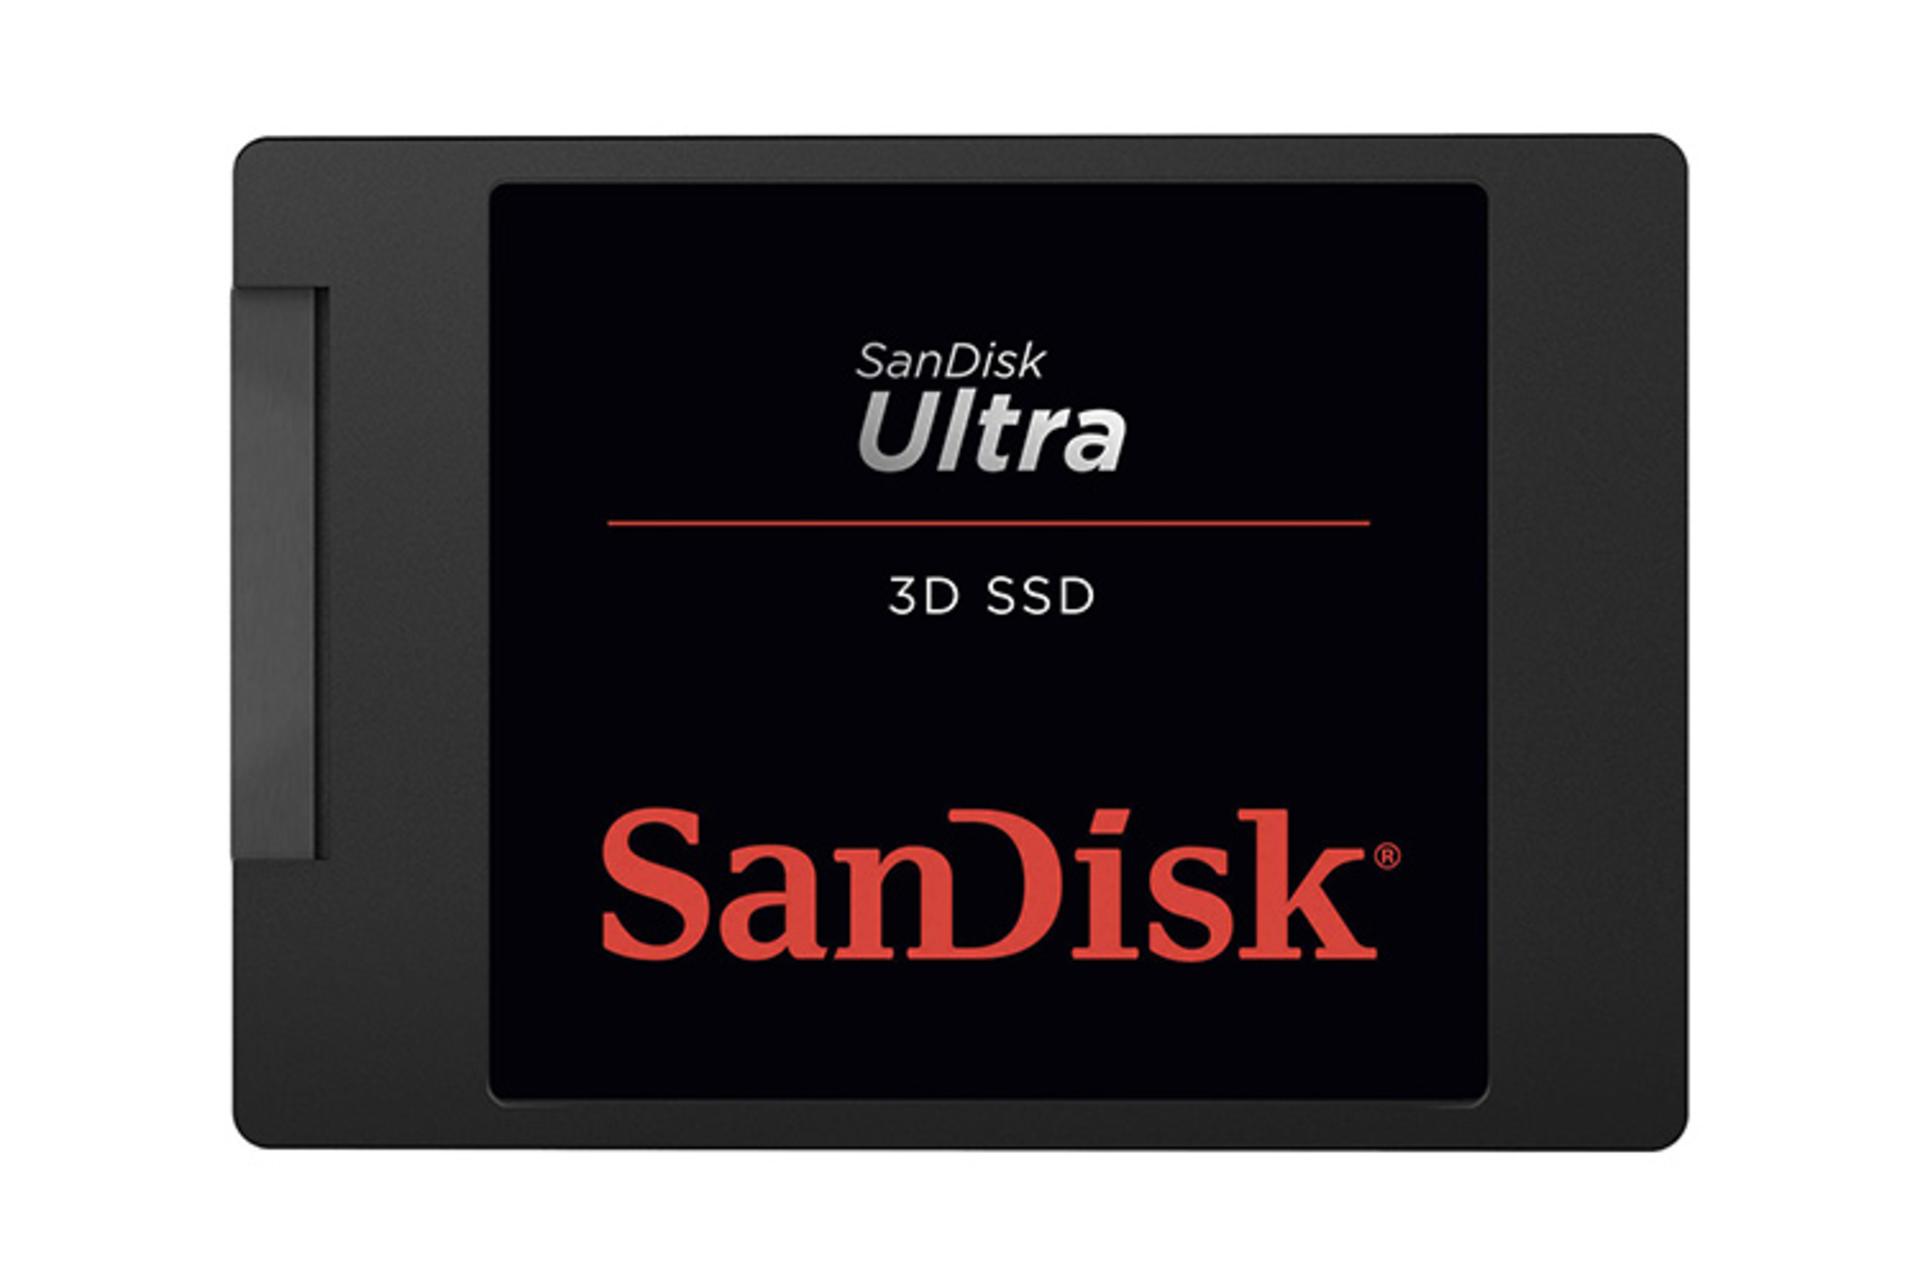 SanDisk 3D SSD 250GB